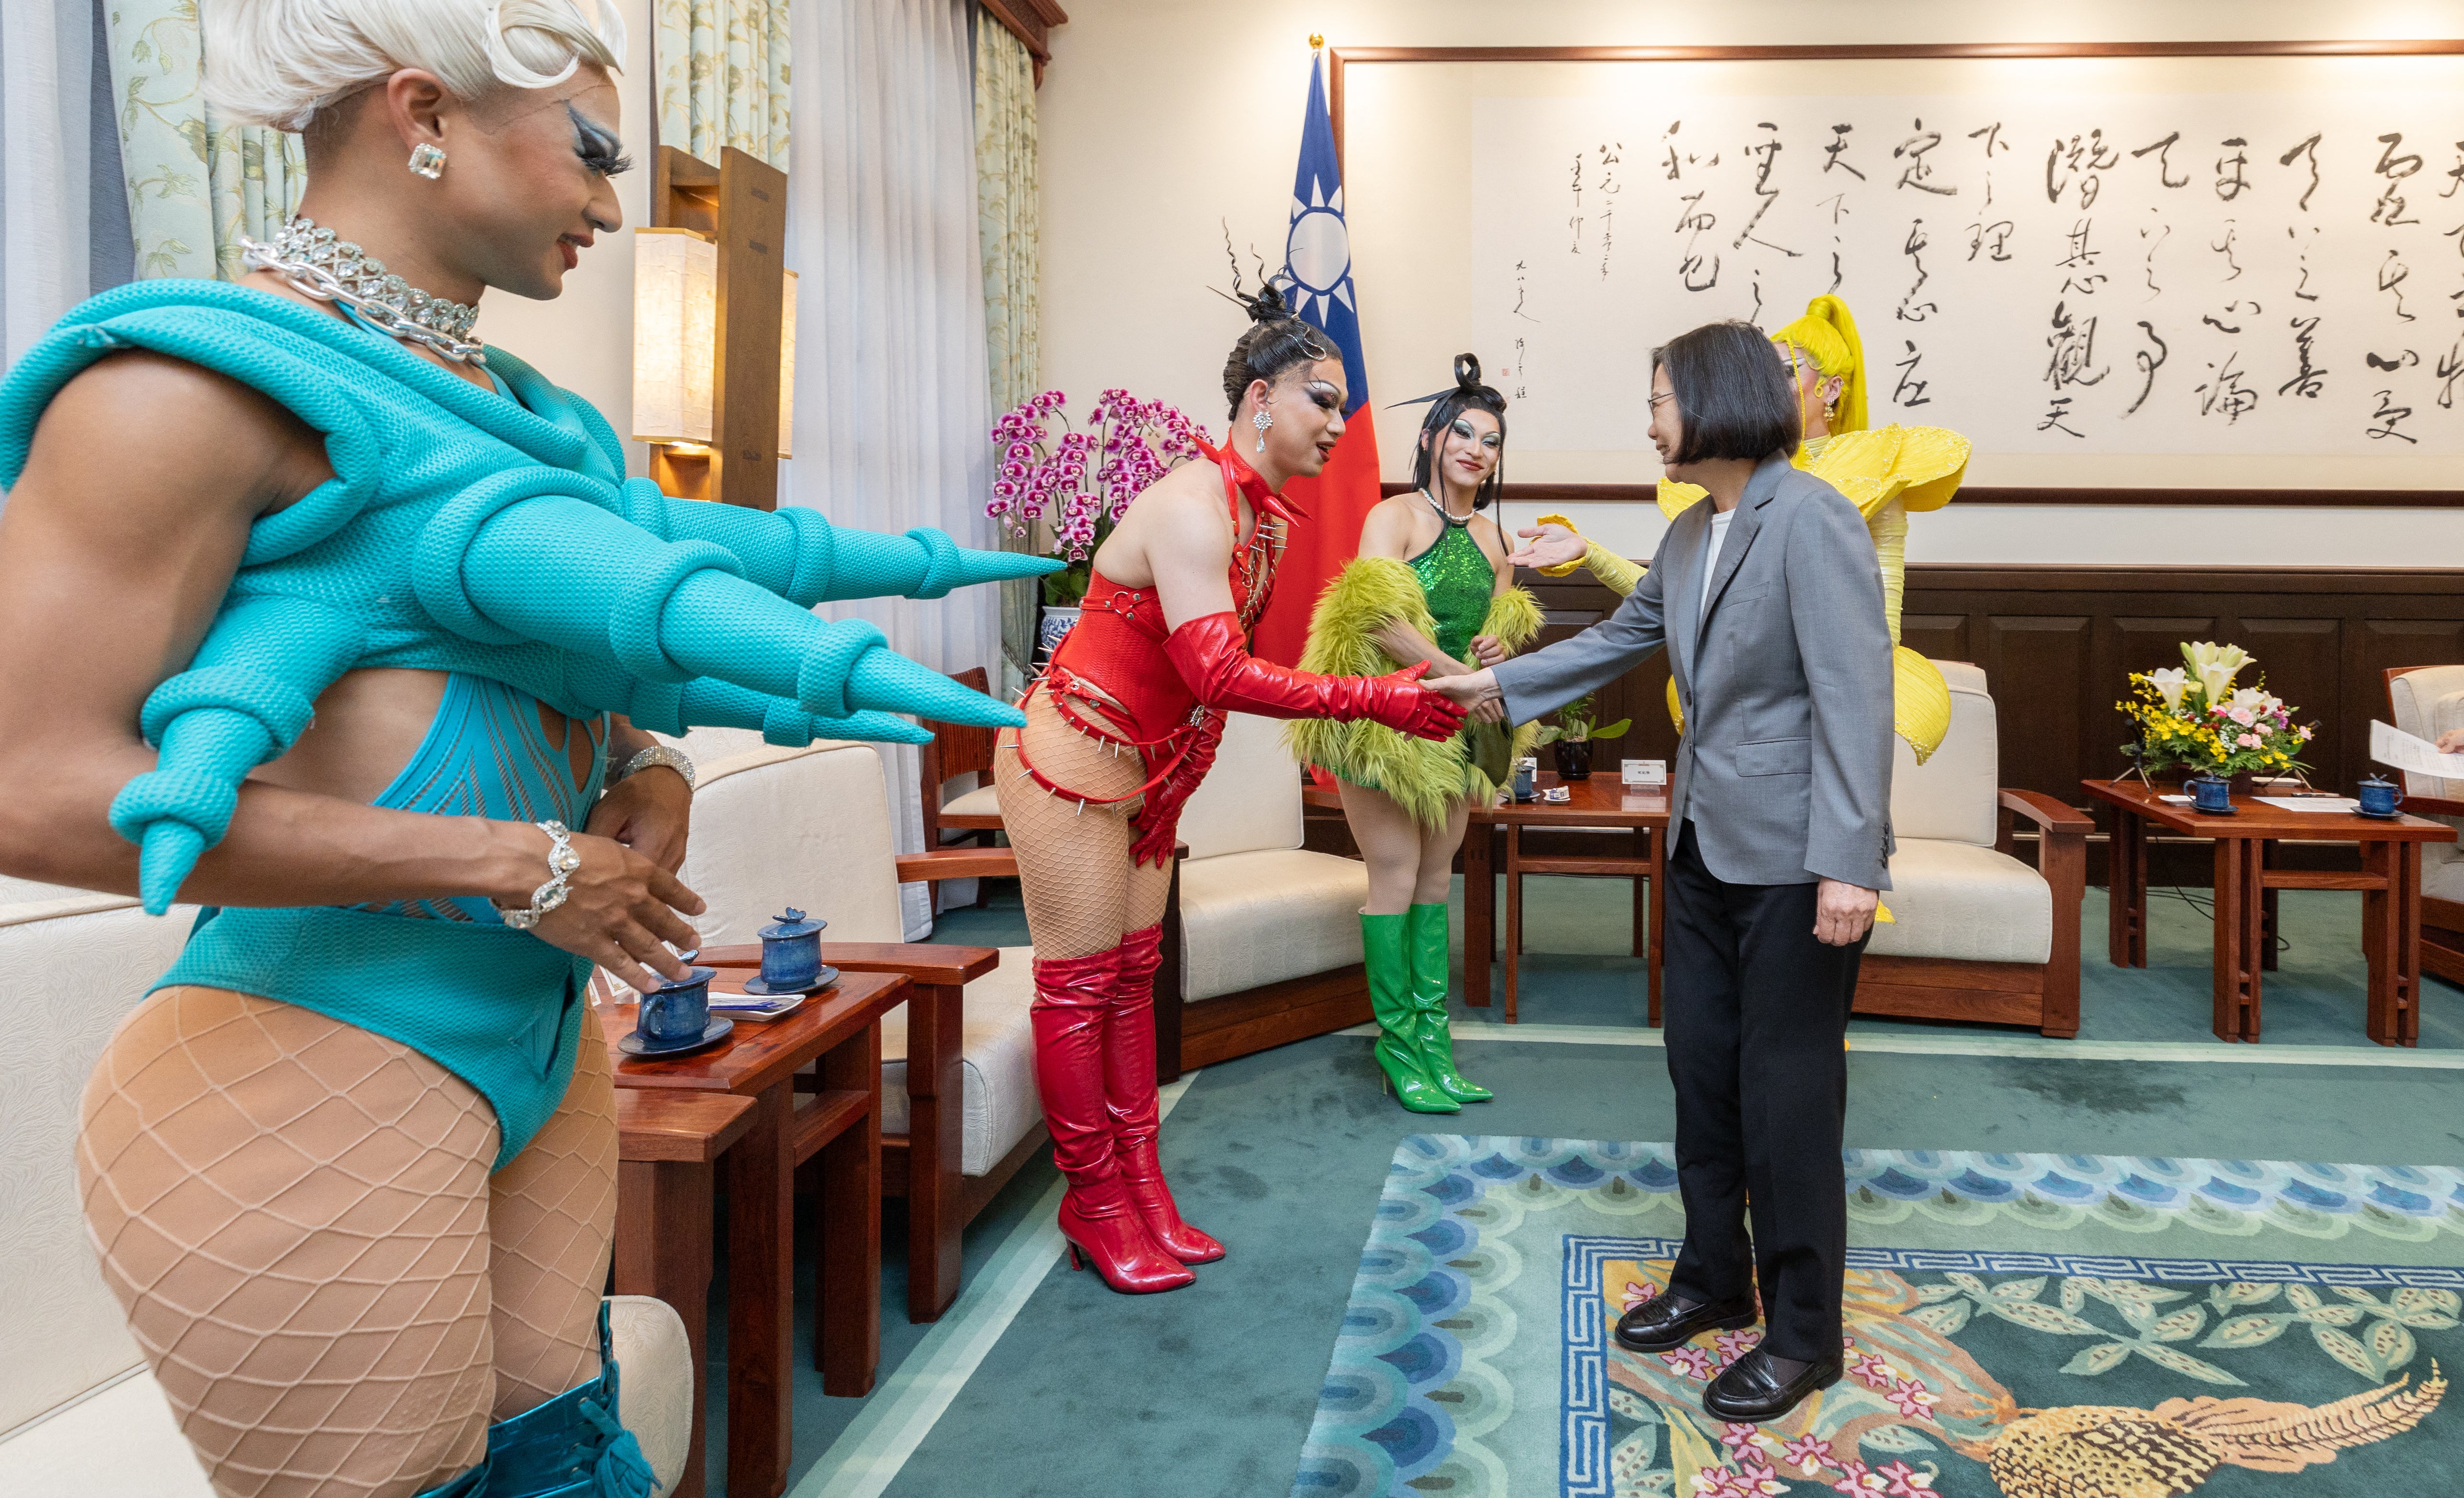 Taiwan’s president Tsai Ing-wen meets drag queen Nymphia Wind and her team